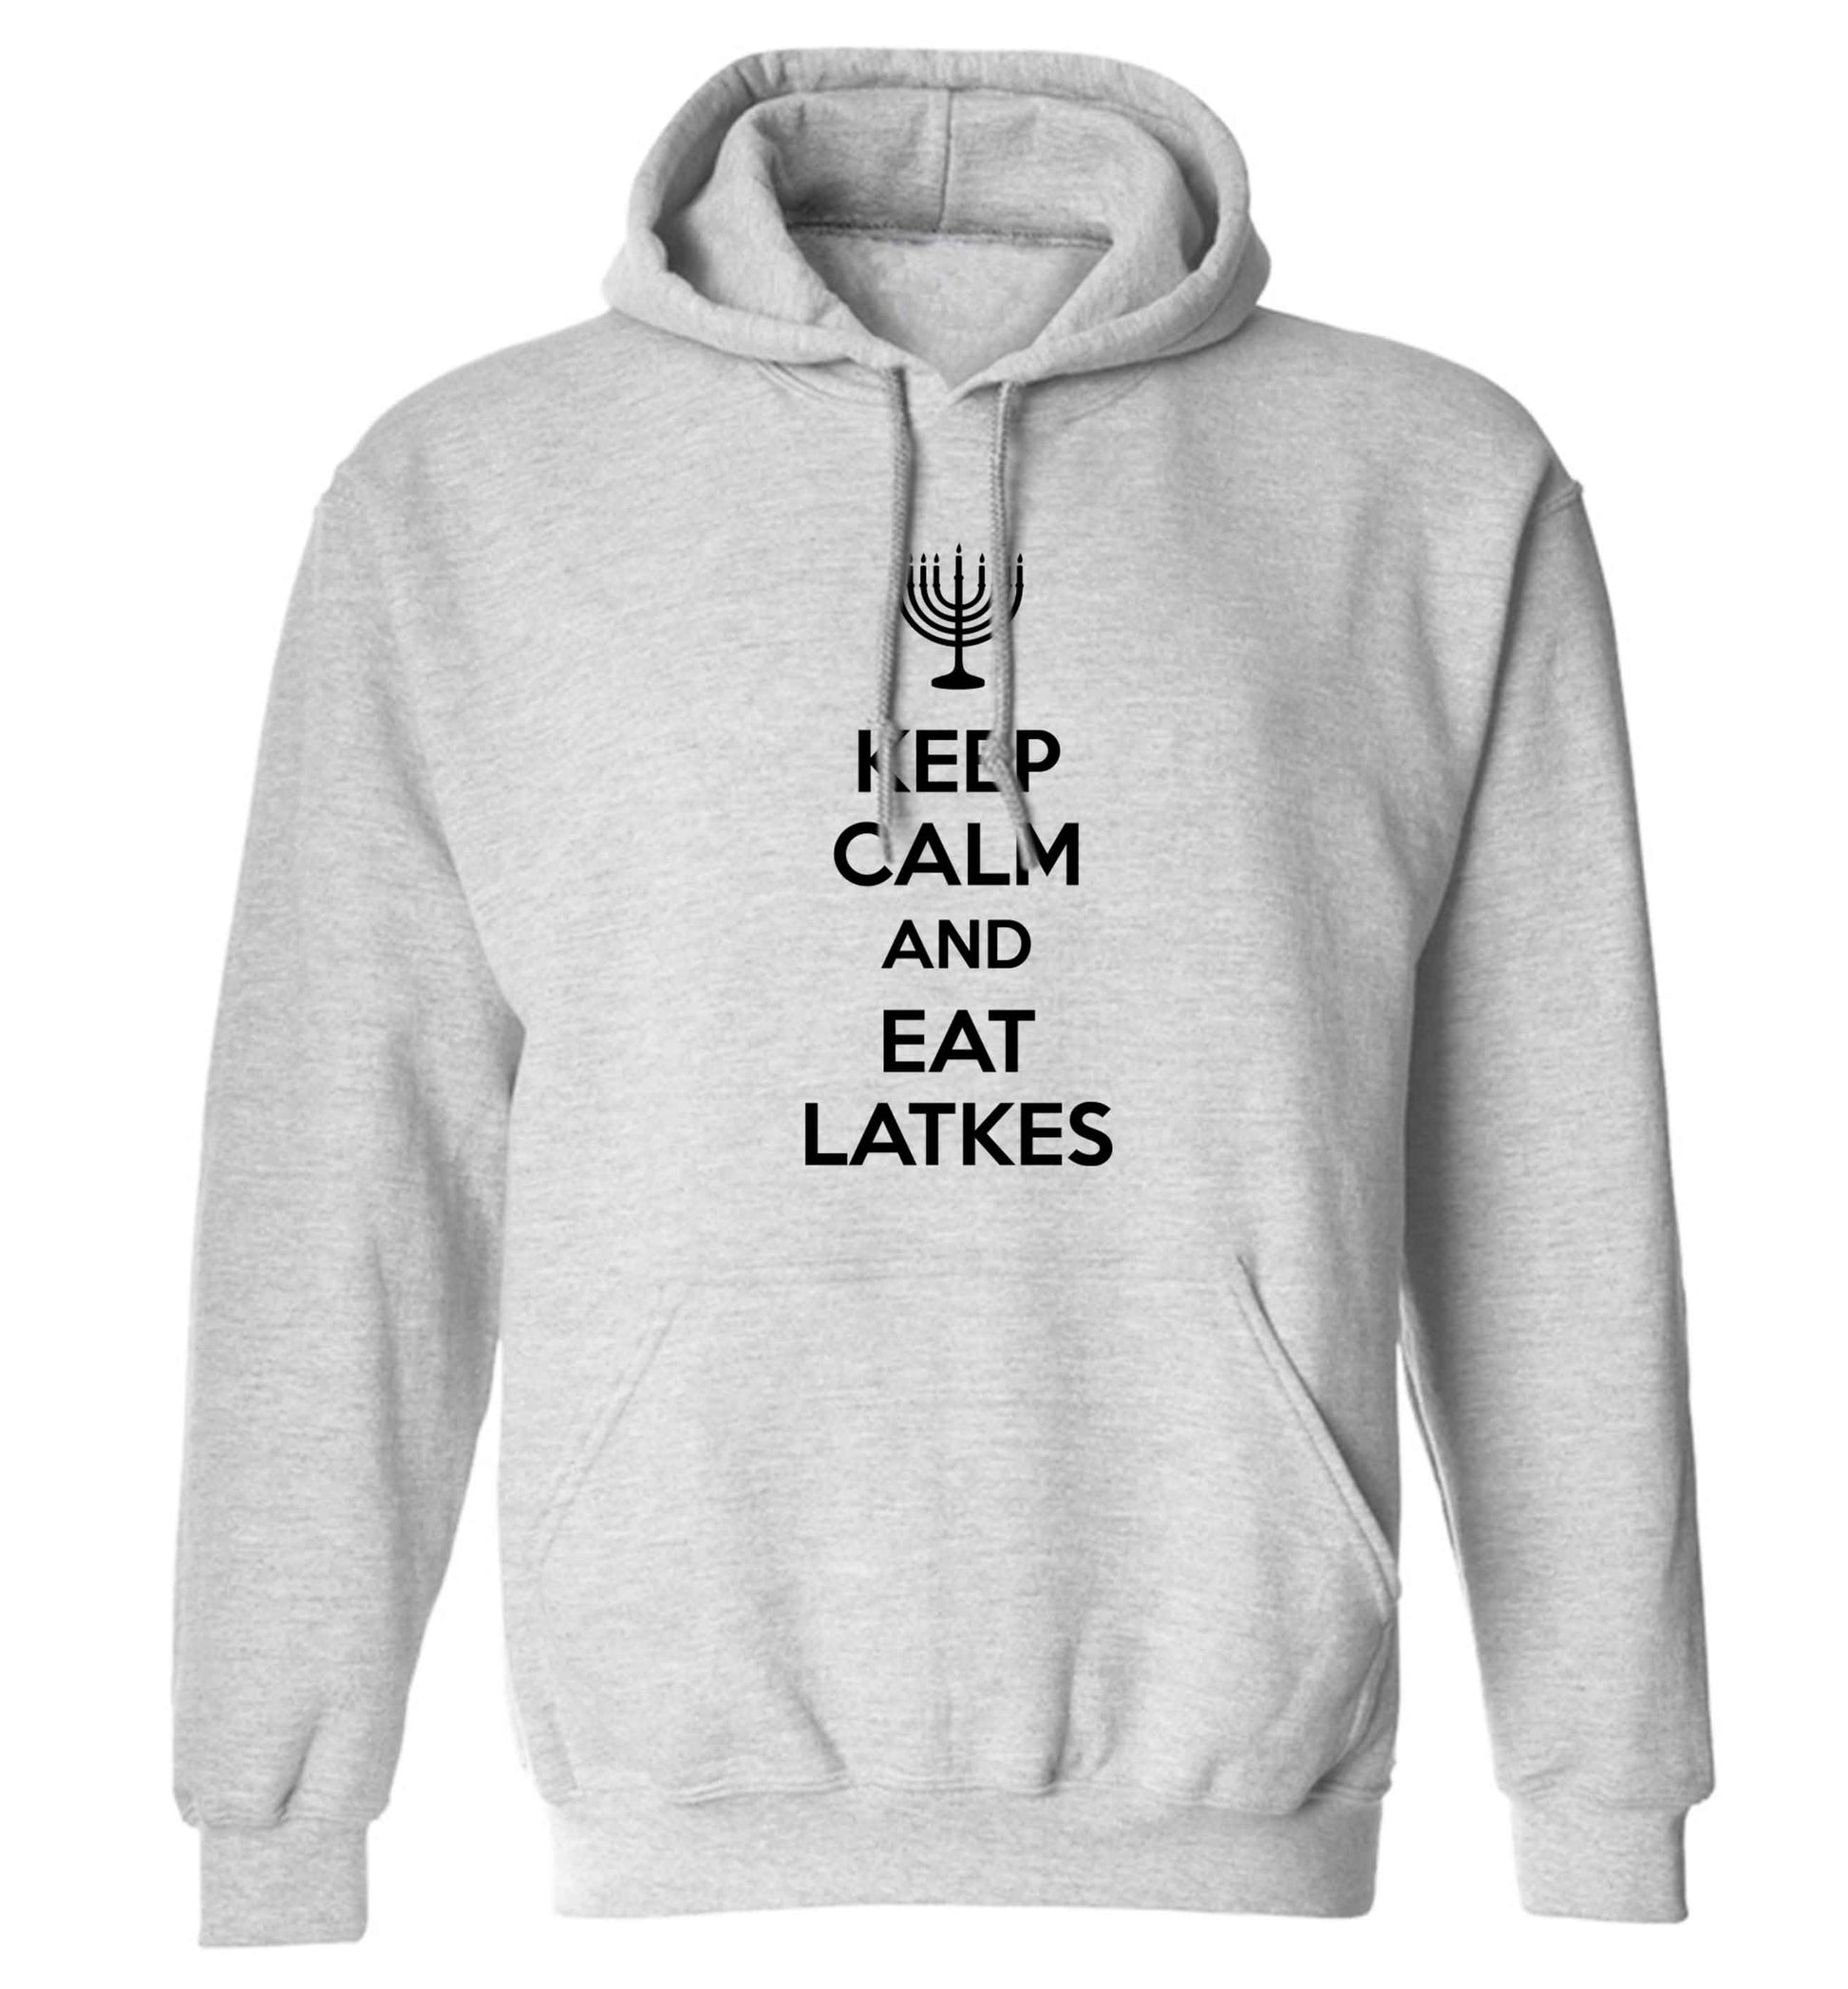 Keep calm and eat latkes adults unisex grey hoodie 2XL